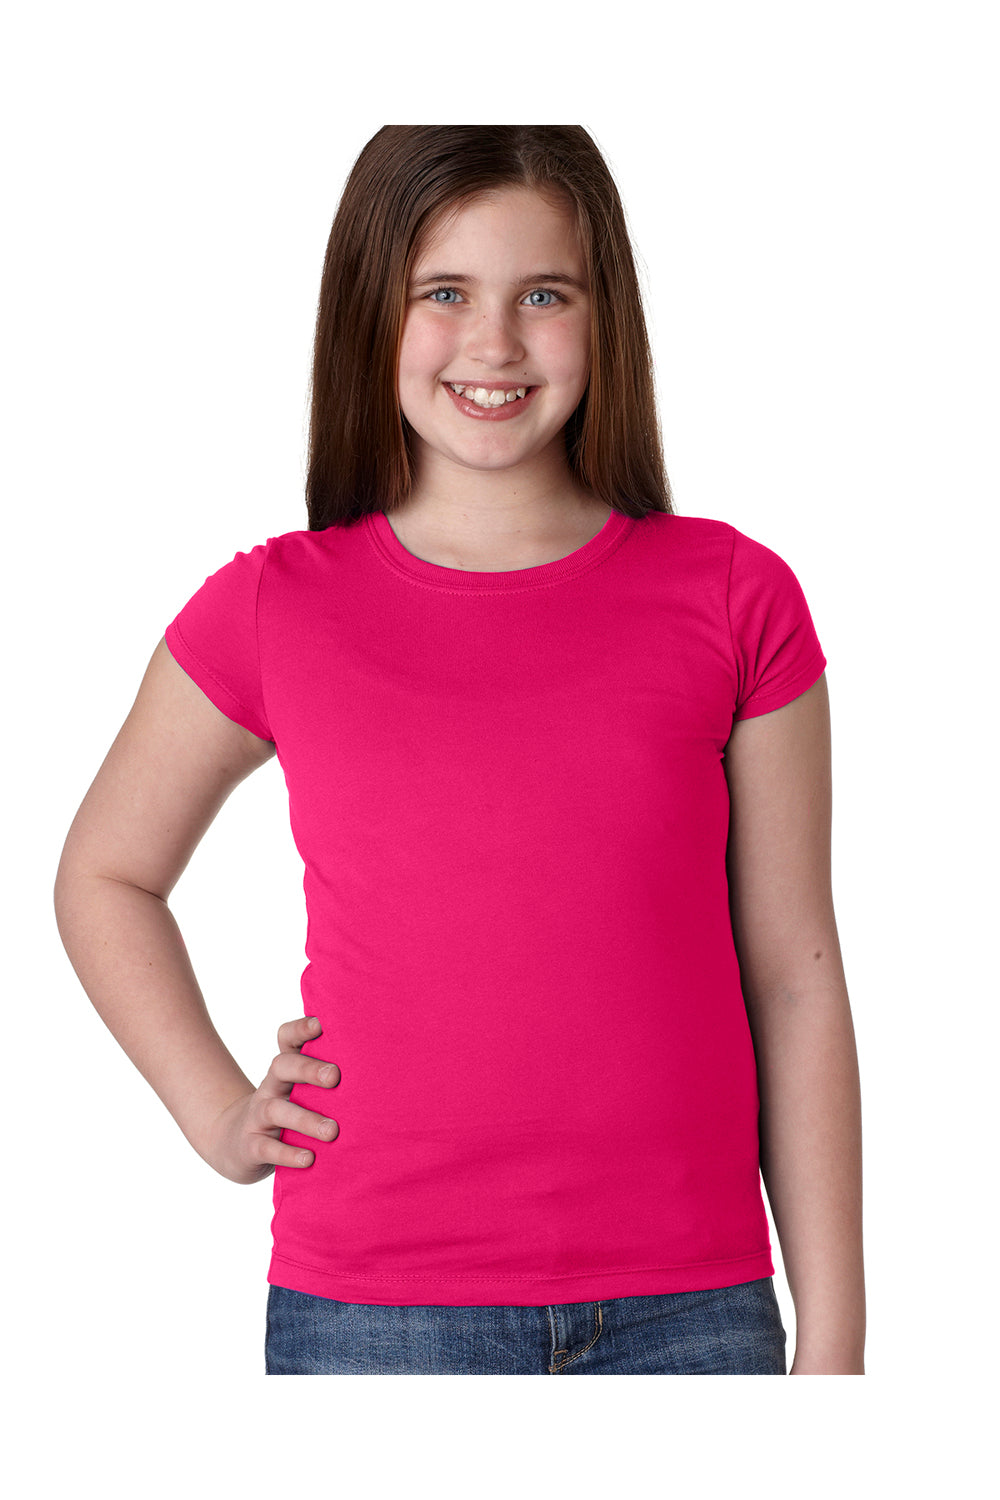 Next Level N3710 Youth Princess Fine Jersey Short Sleeve Crewneck T-Shirt Raspberry Pink Front